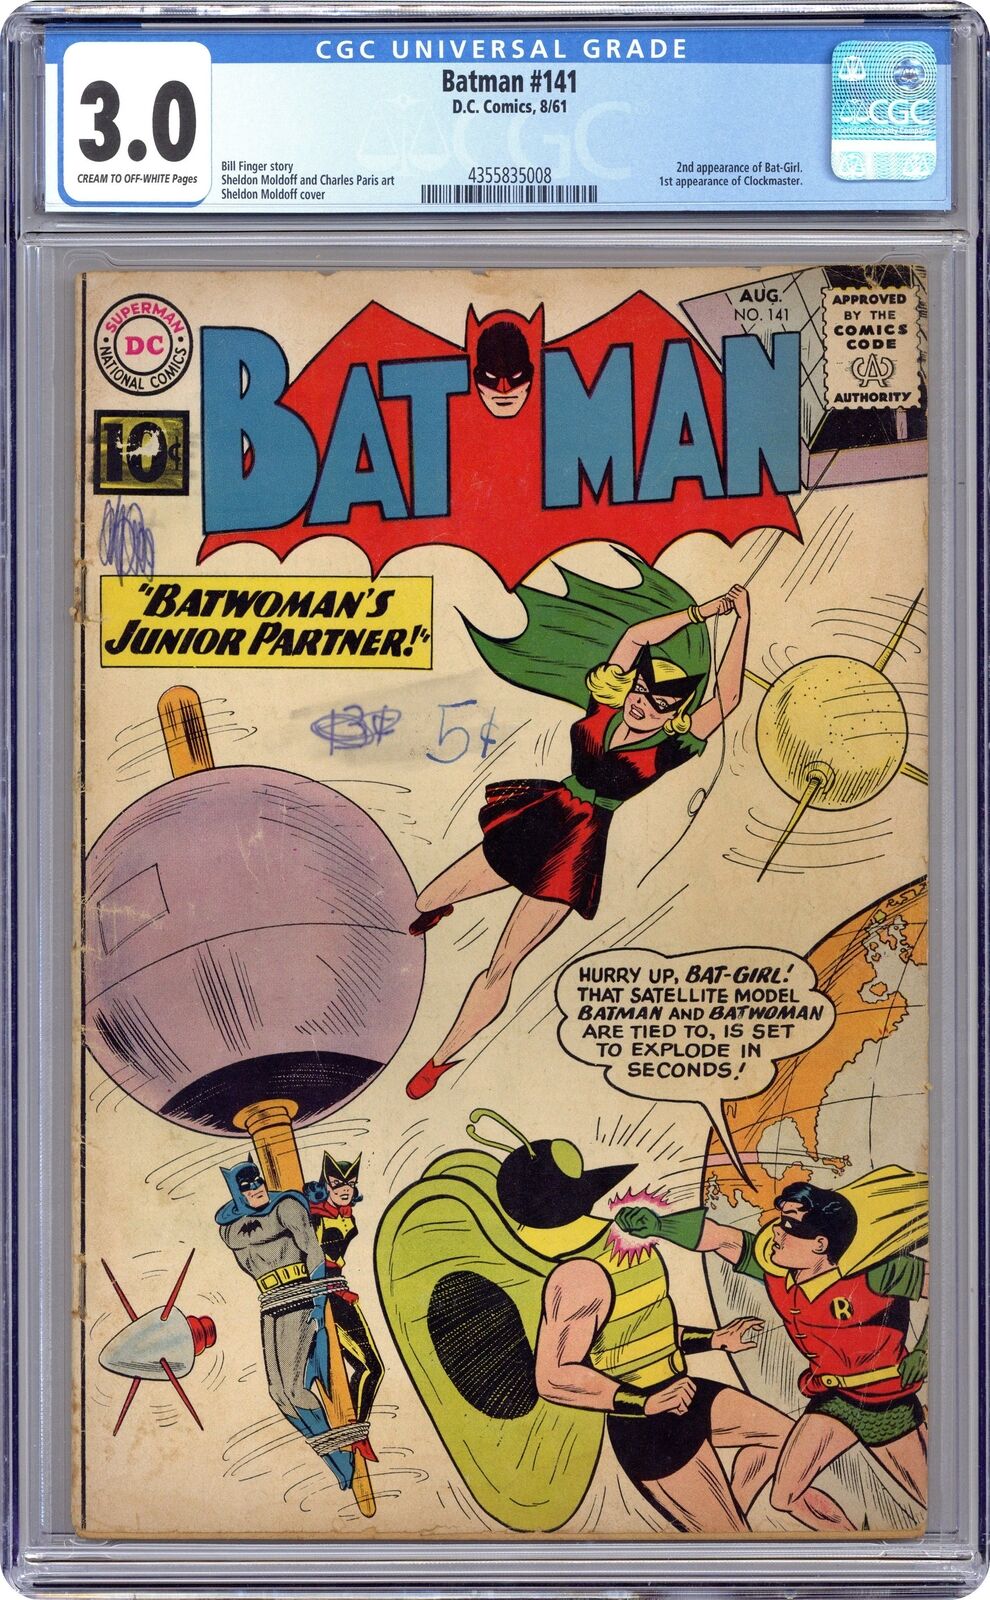 Batman #141 CGC 3.0 1961 4355835008